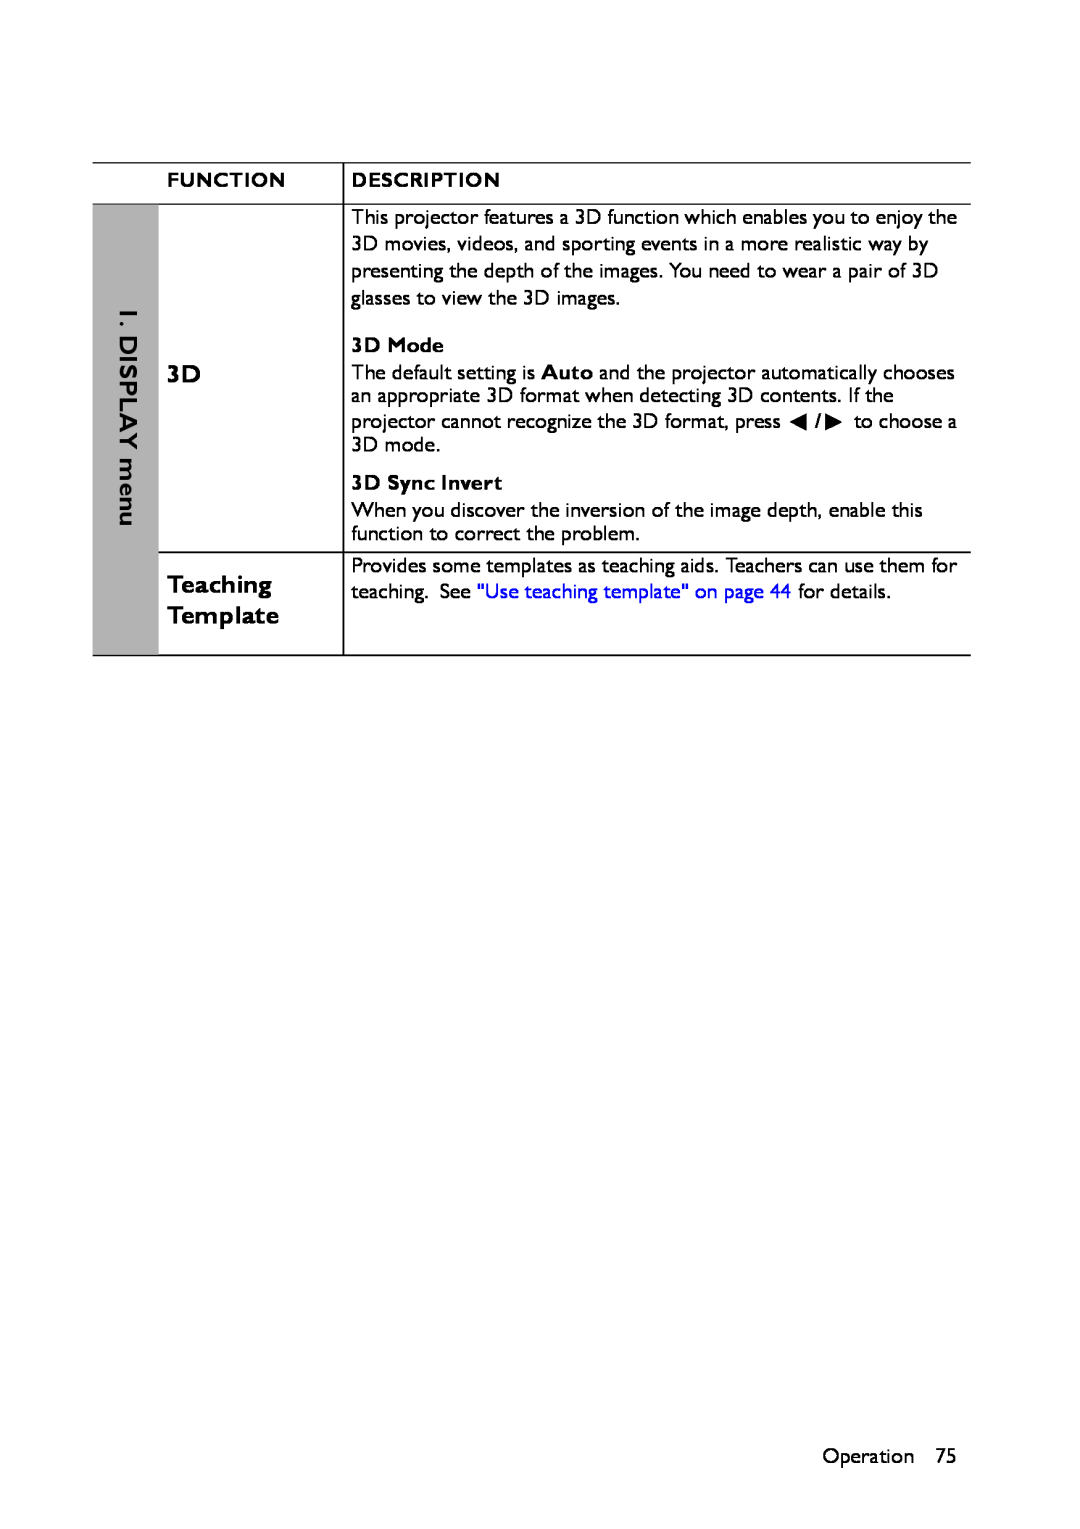 BenQ MX661 user manual Teaching, Template, DISPLAY menu, teaching. See Use teaching template on page 44 for details 